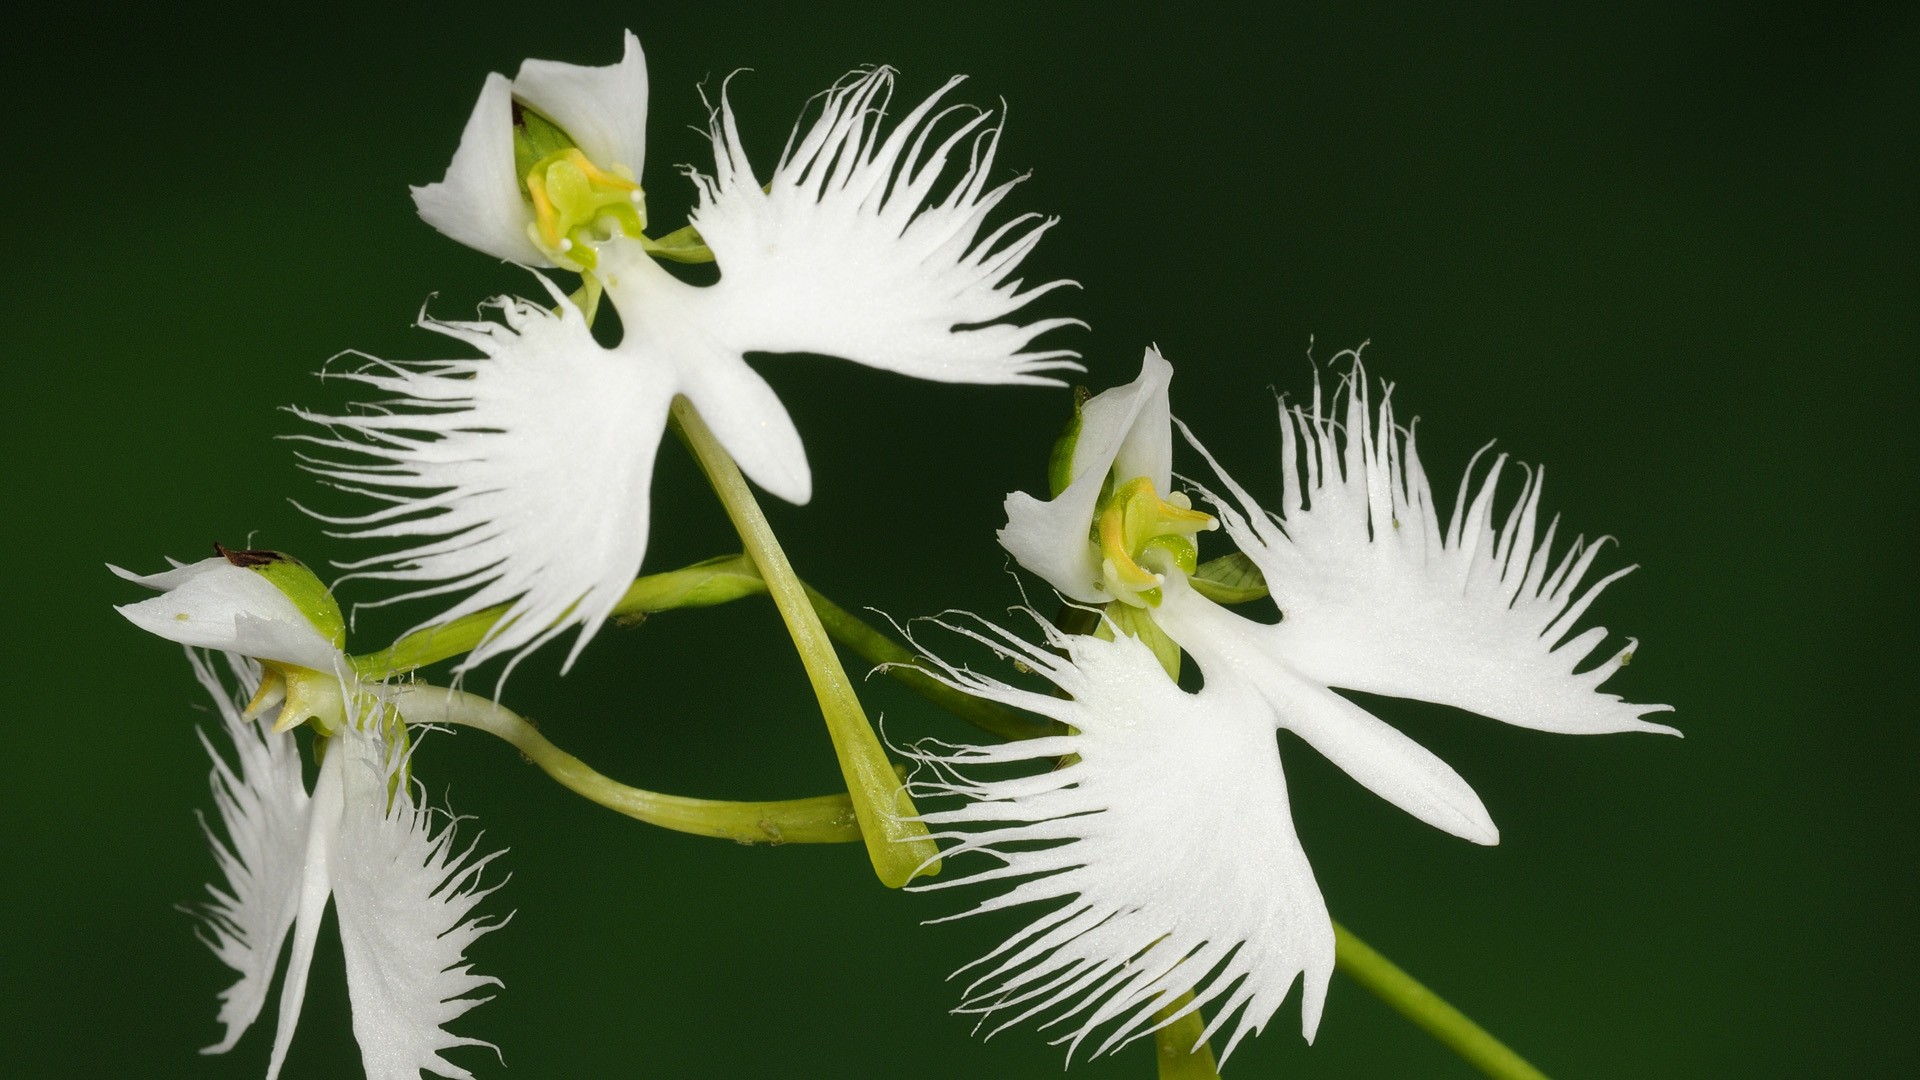 White unique. Хабенария Радиата белая цапля. Habenaria Radiata. Орхидея «большая белая цапля» (Habenaria Radiata). Орхидея хабенария Радиата. Орхидея хабенария Радиата – белая цапля.